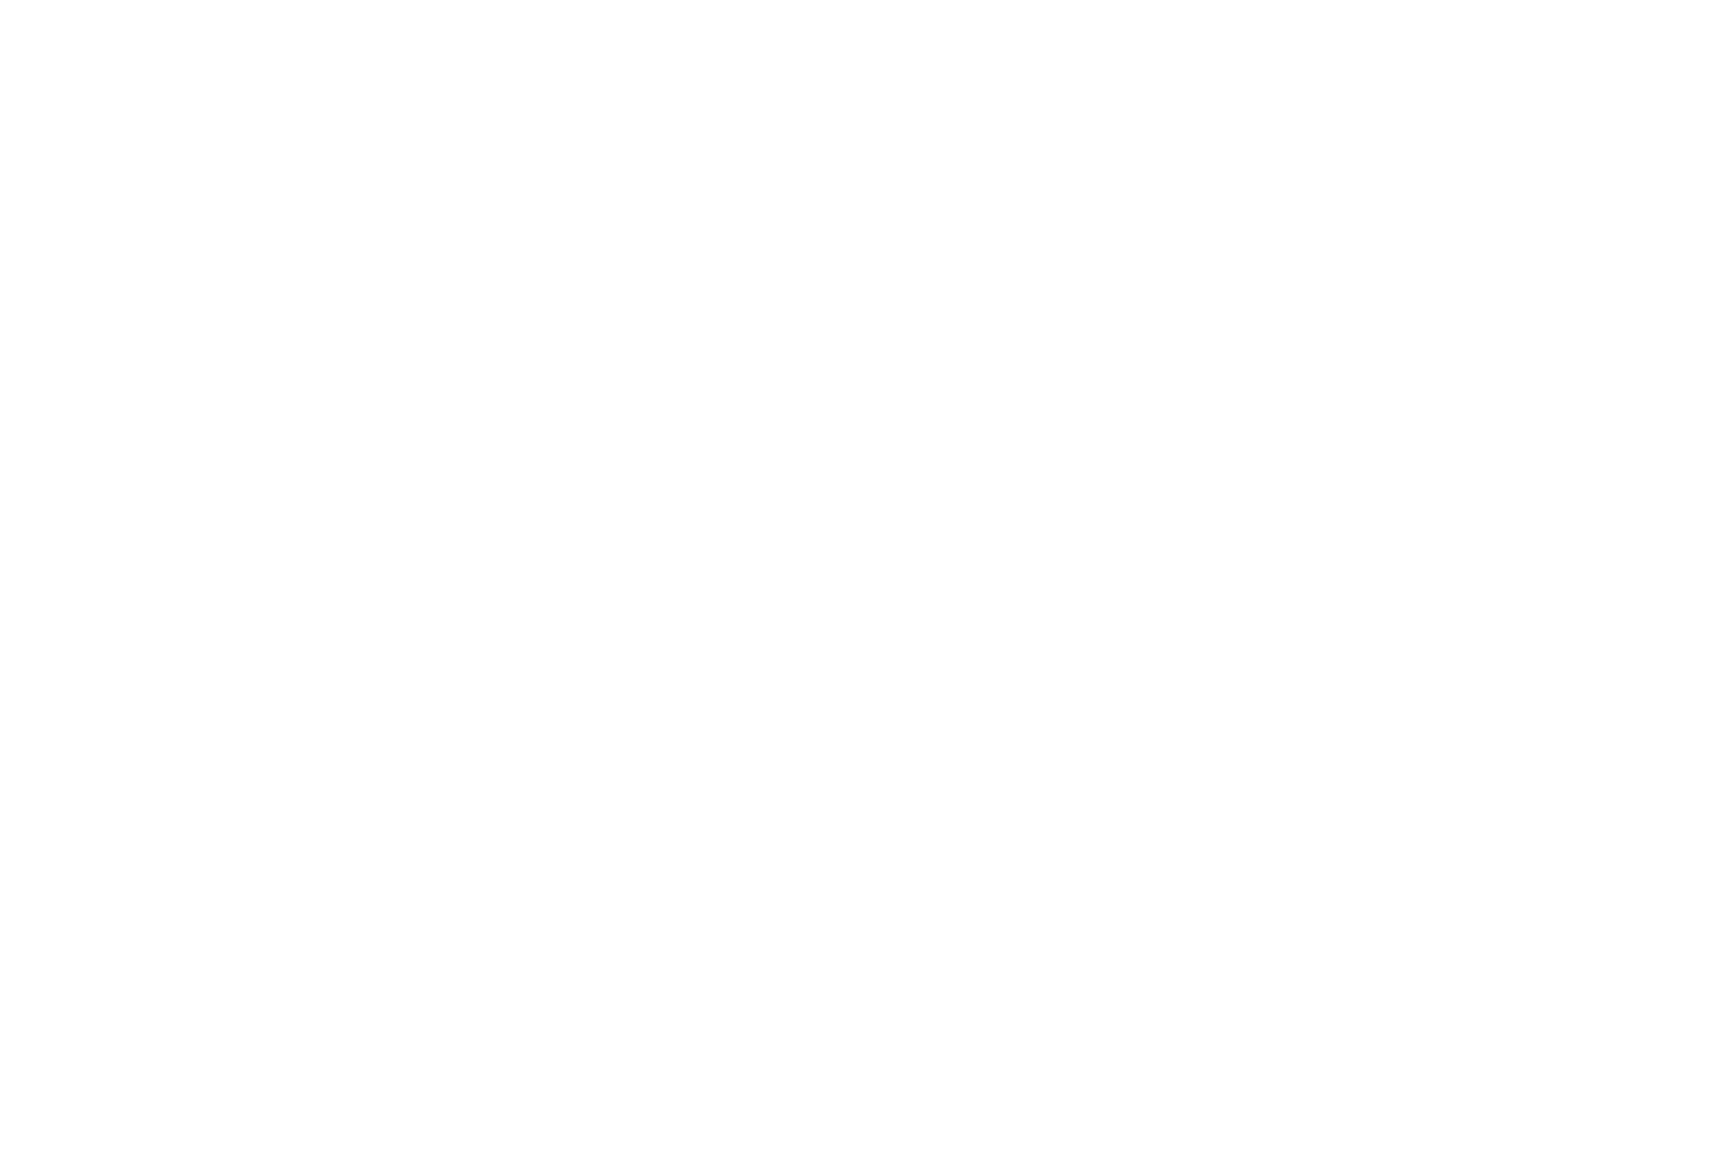 BEST EDUCATIONAL DOCUMENTARY - Christian Georgia Film Online - 2022 (1)